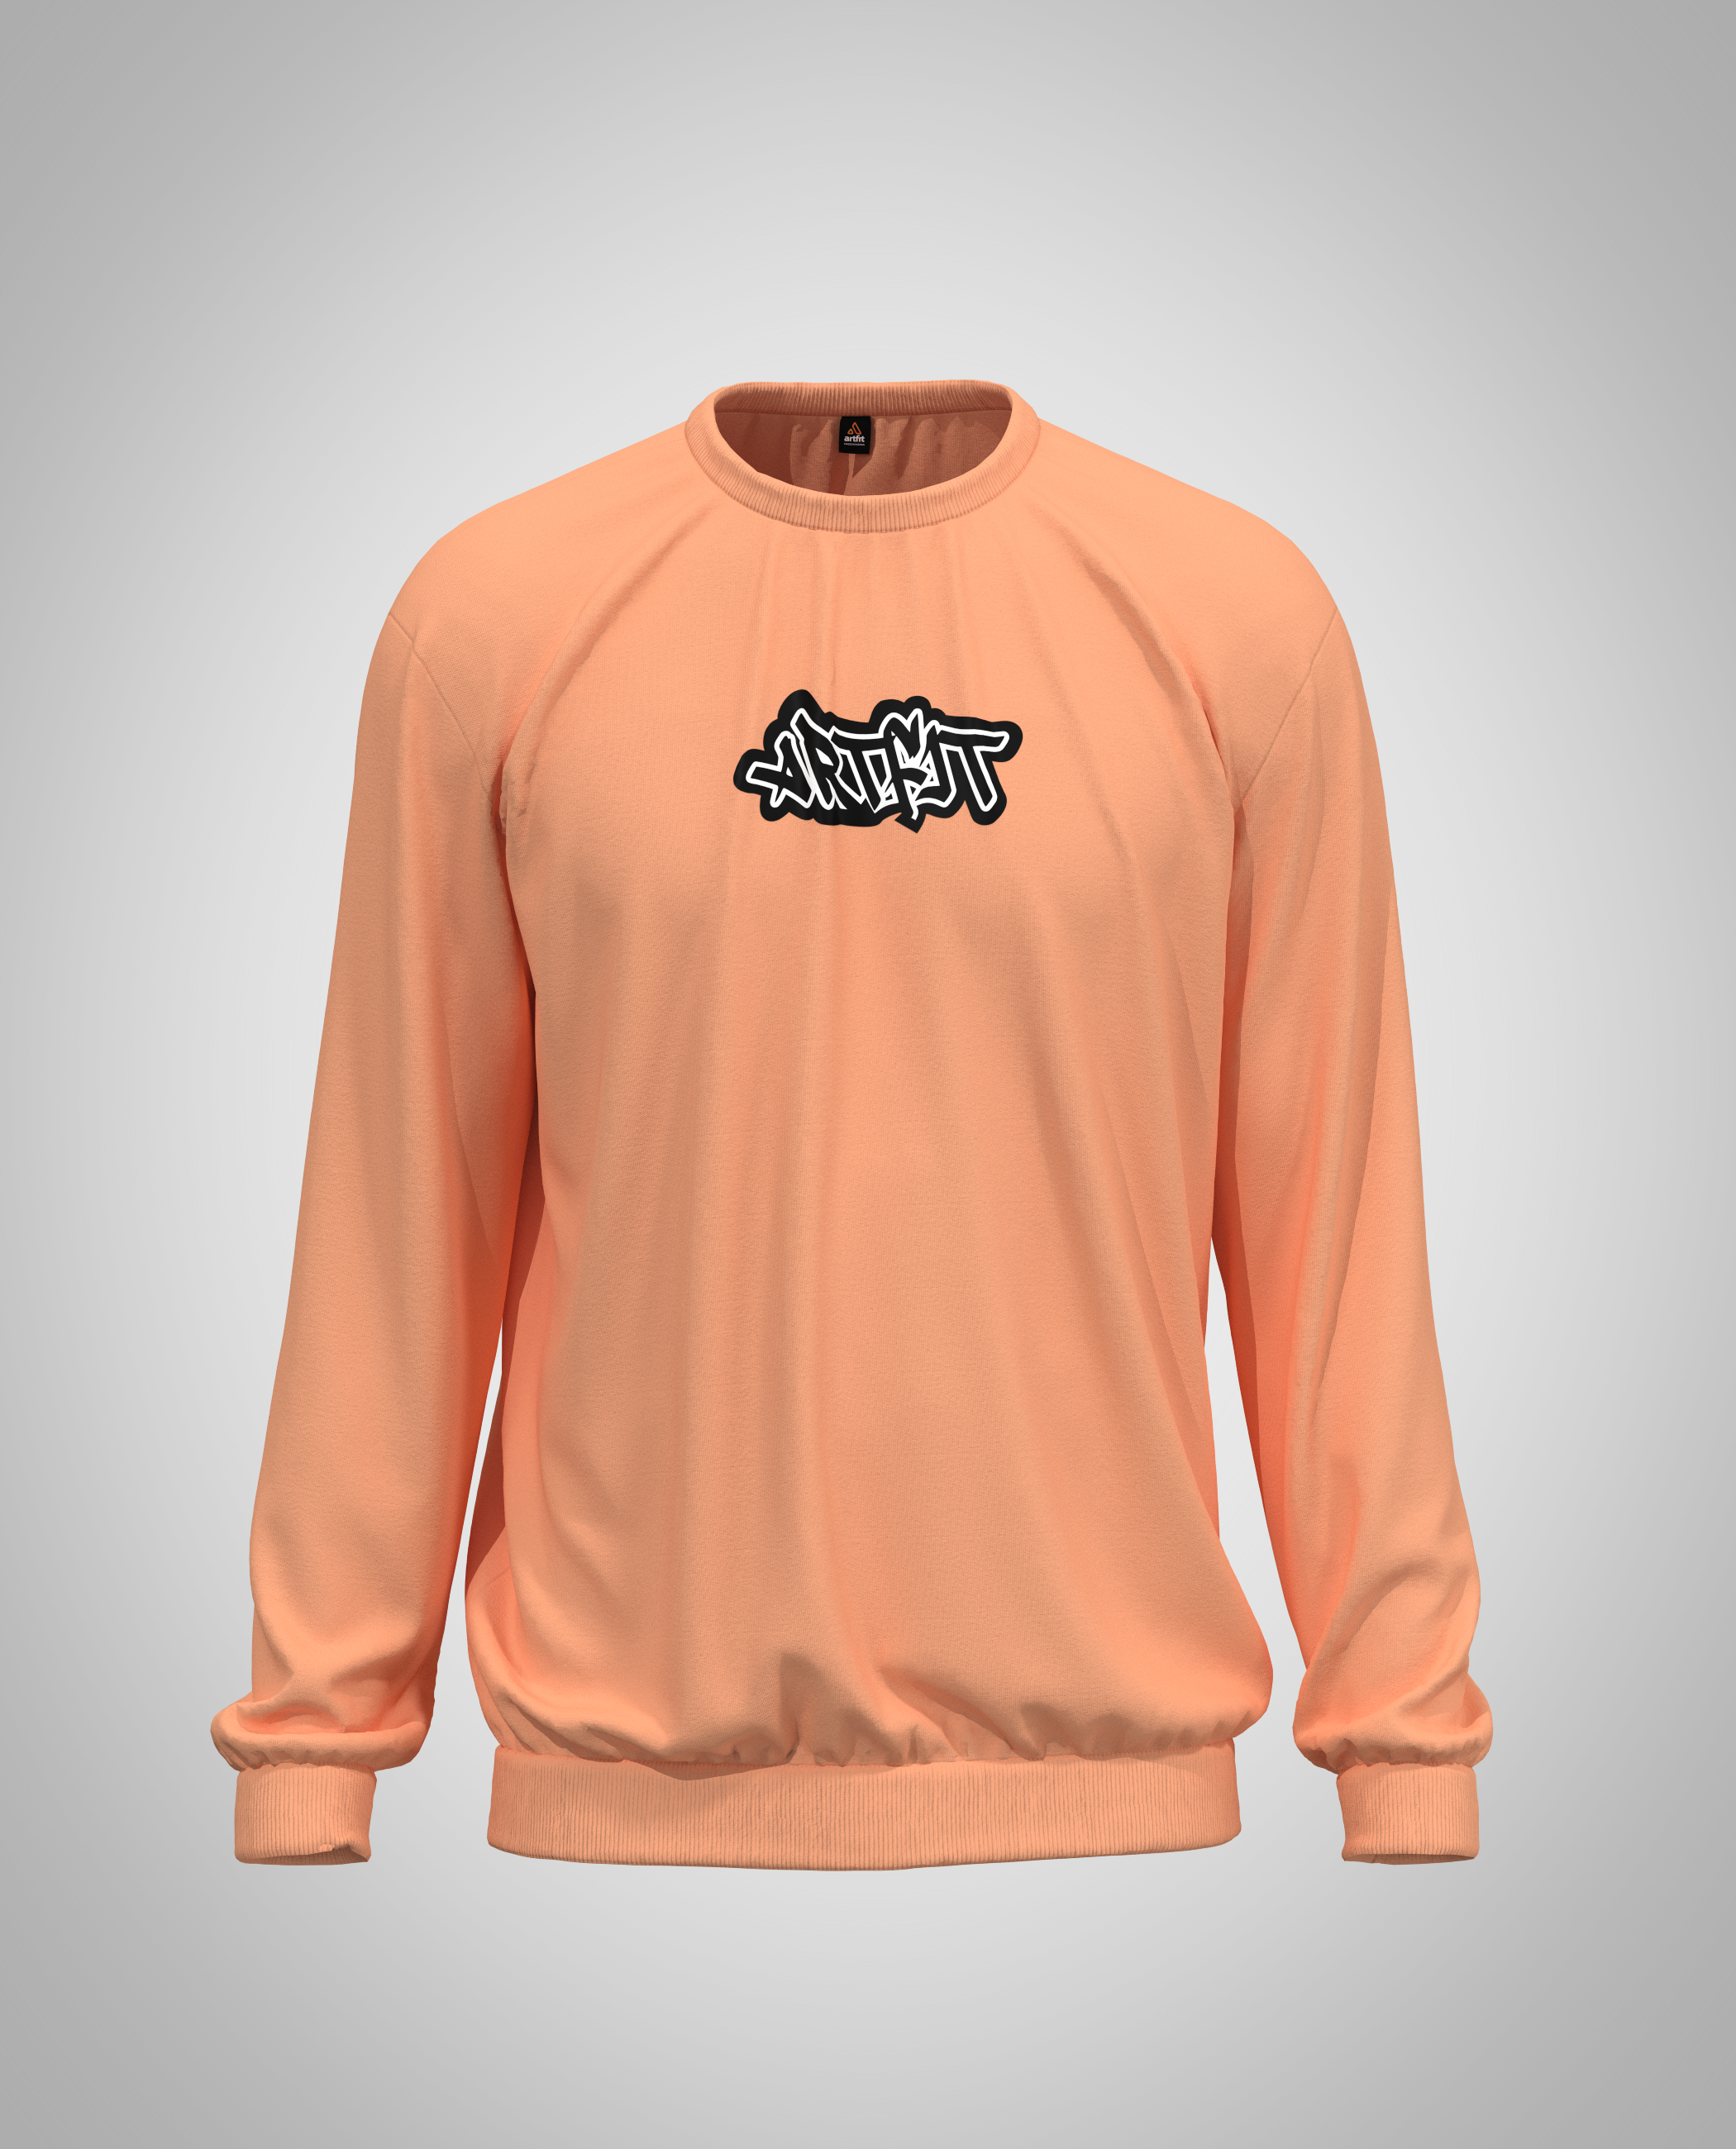 Peach Sweatshirt(Heavy Fabric)